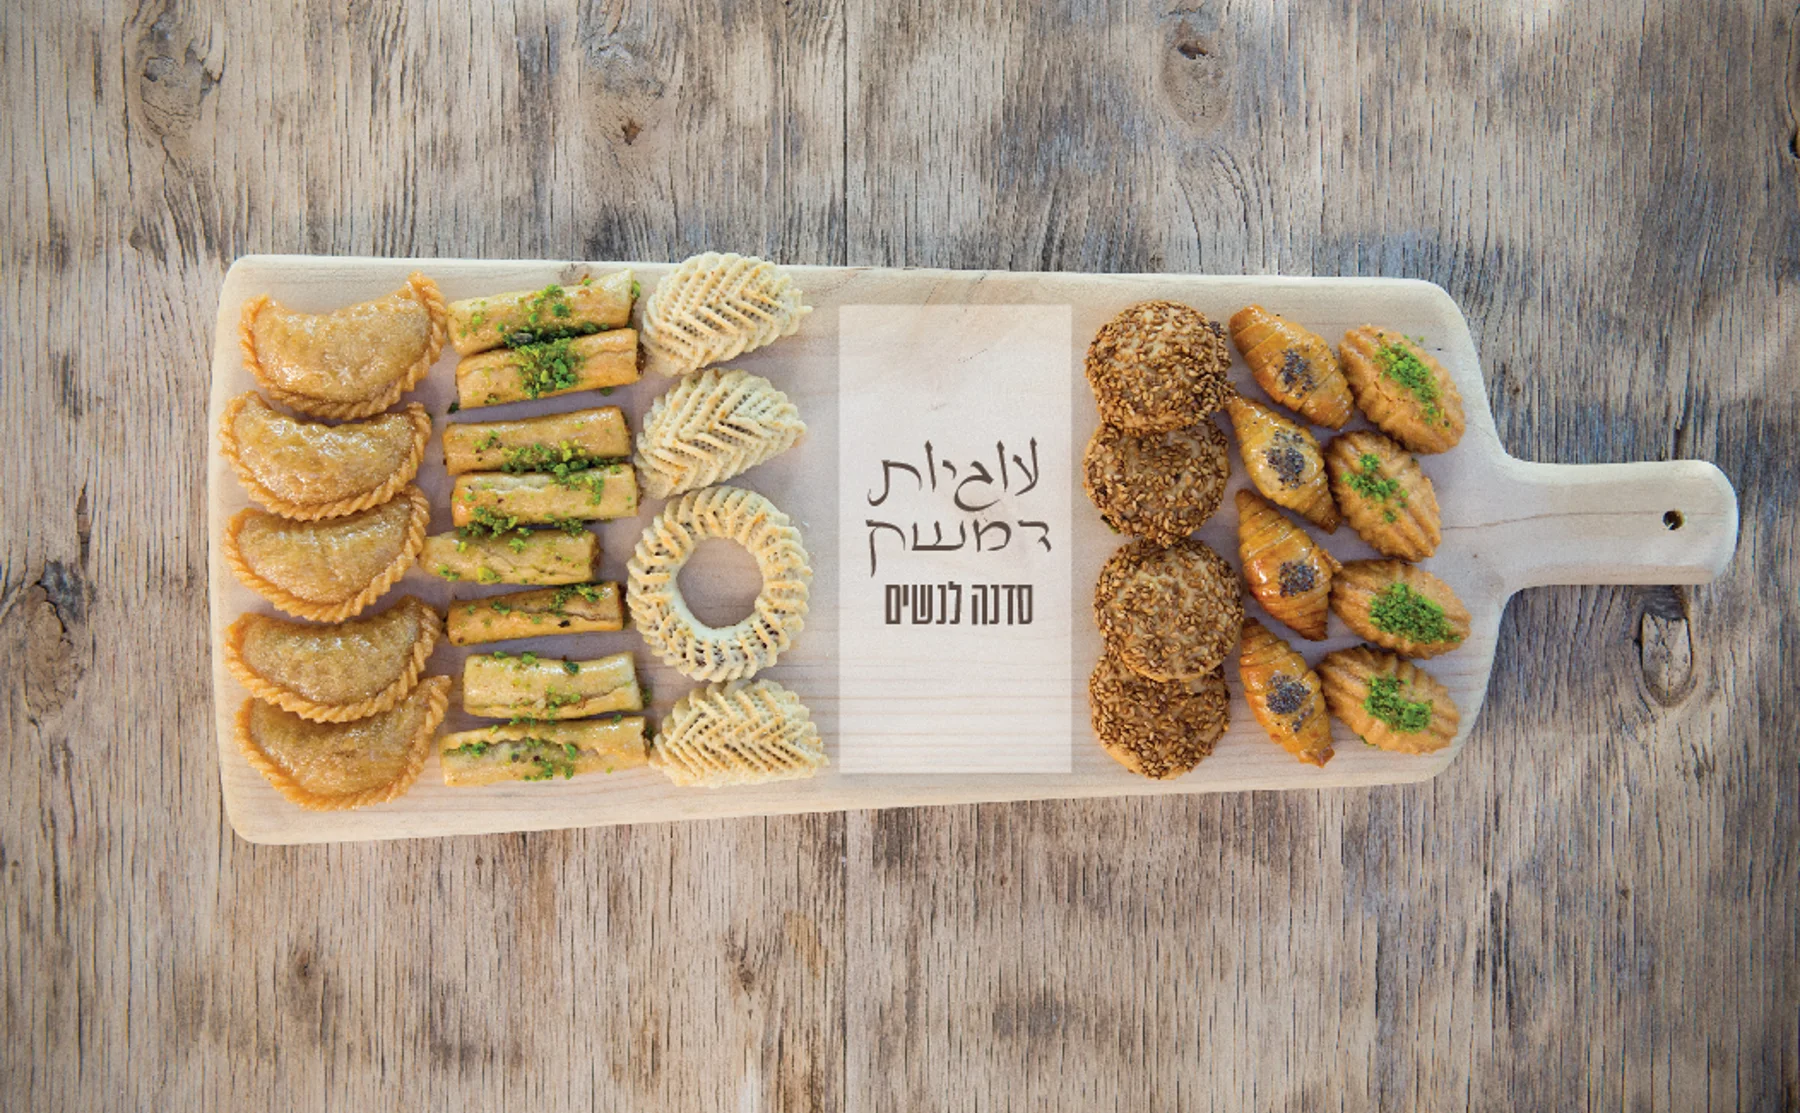 Private Event-סדנת מעמולים ועוגיות דמשק בכפרים הדרוזיים בגולן - 1352407